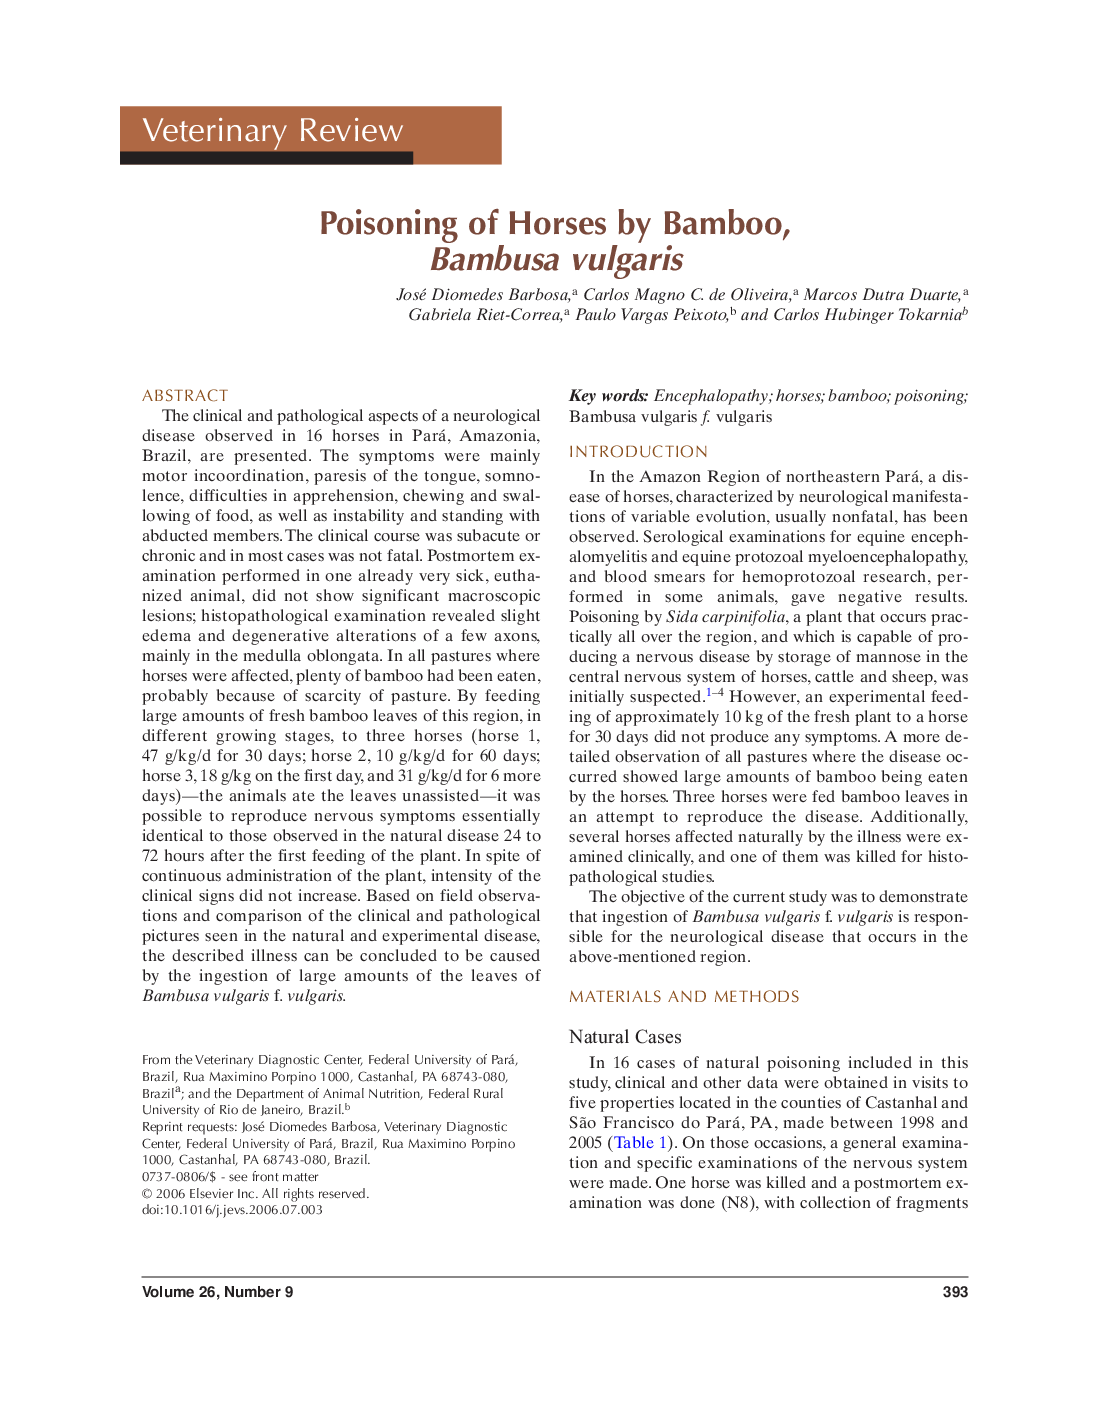 Poisoning of horses by bamboo, Bambusa vulgaris